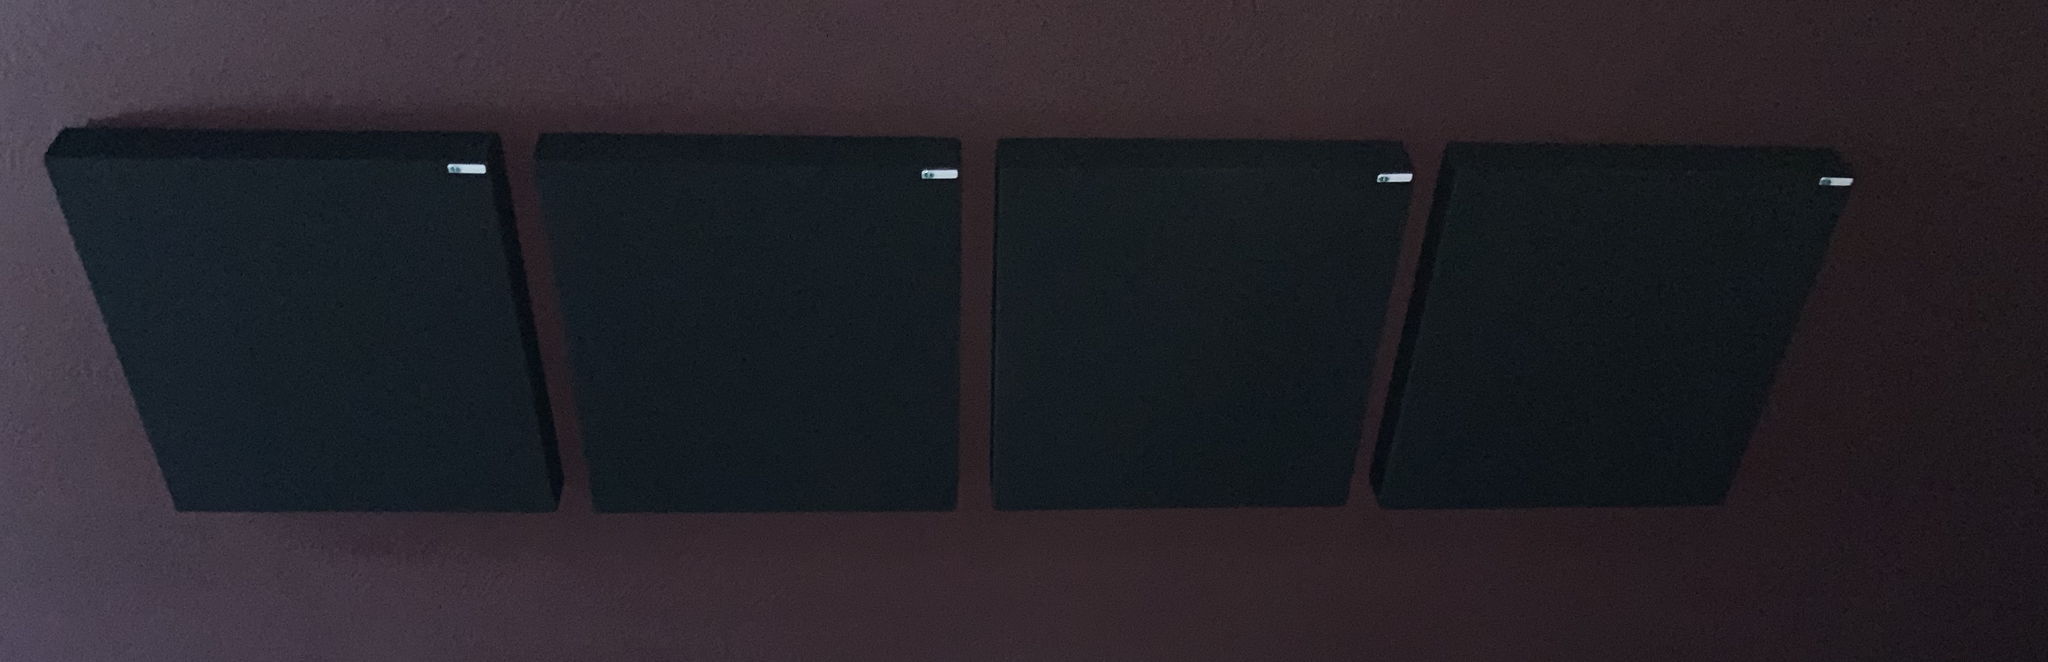 GIK 242’s on slanted ceiling - Back Wall